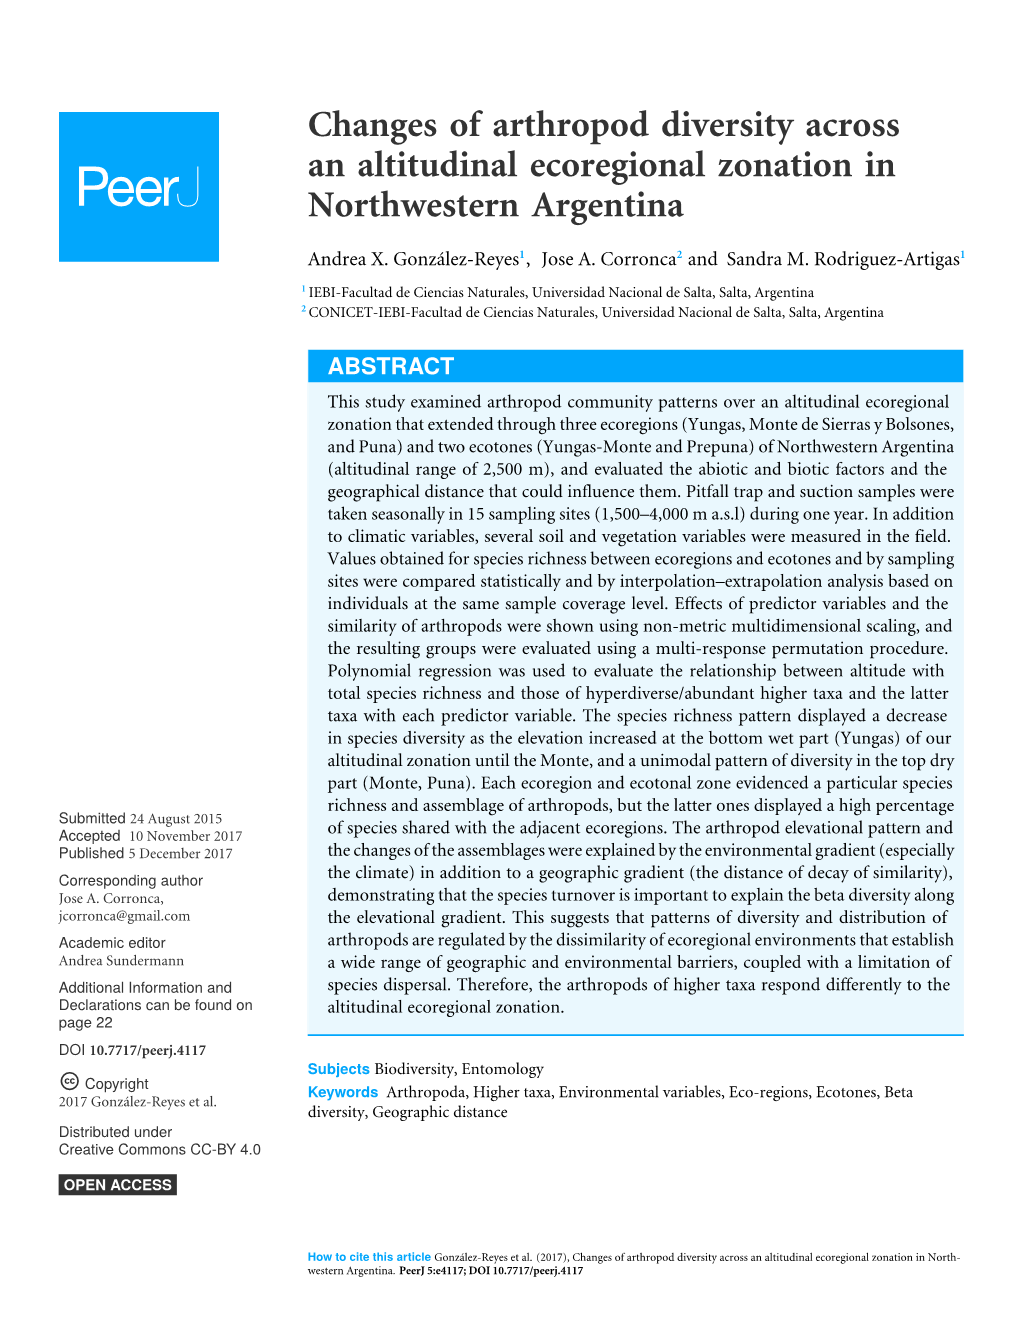 Changes of Arthropod Diversity Across an Altitudinal Ecoregional Zonation in Northwestern Argentina